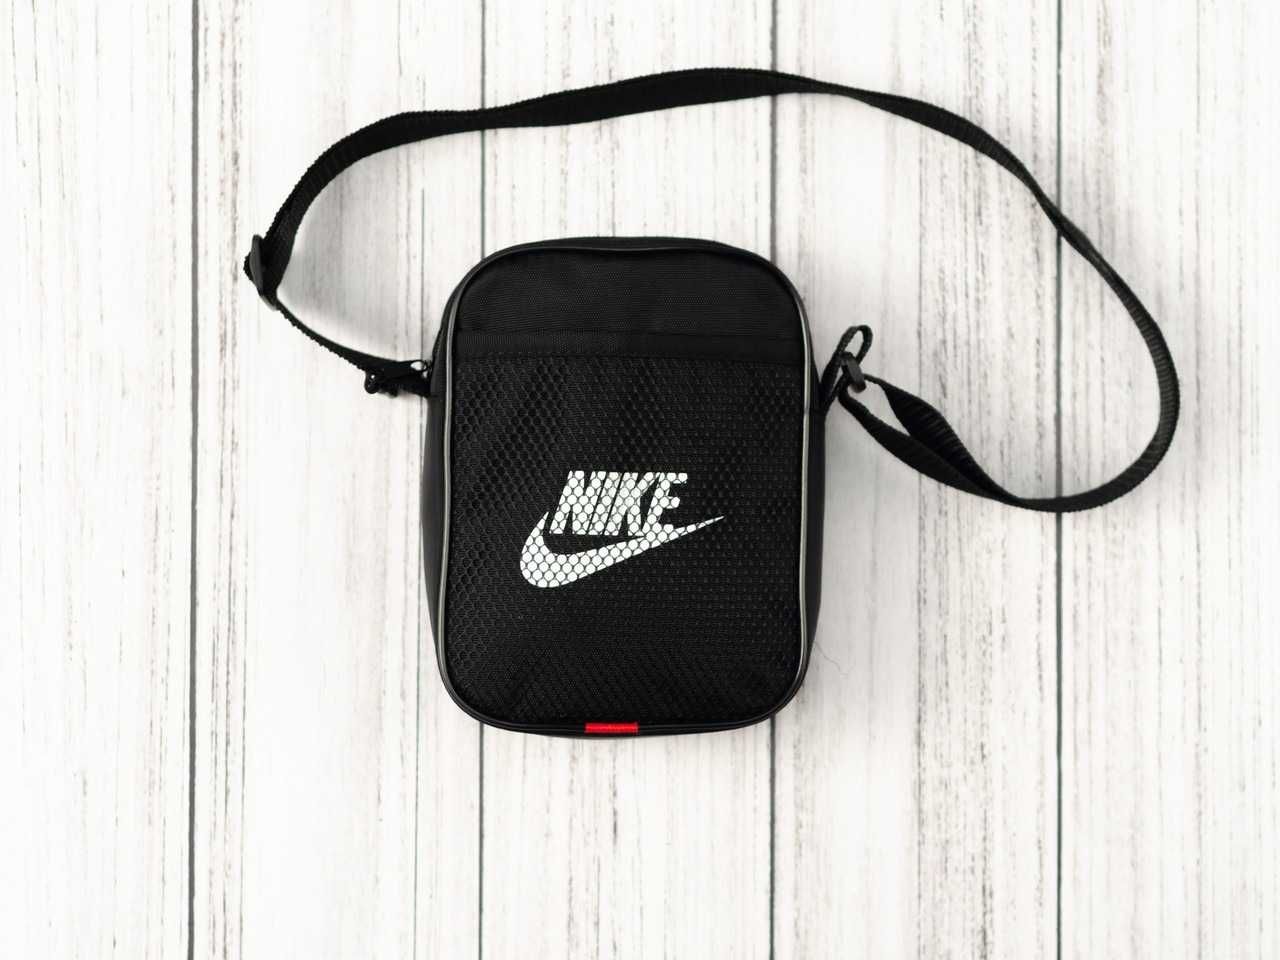 Компактна сумка через плече Nike, стильний месенджер Найк, барсетка